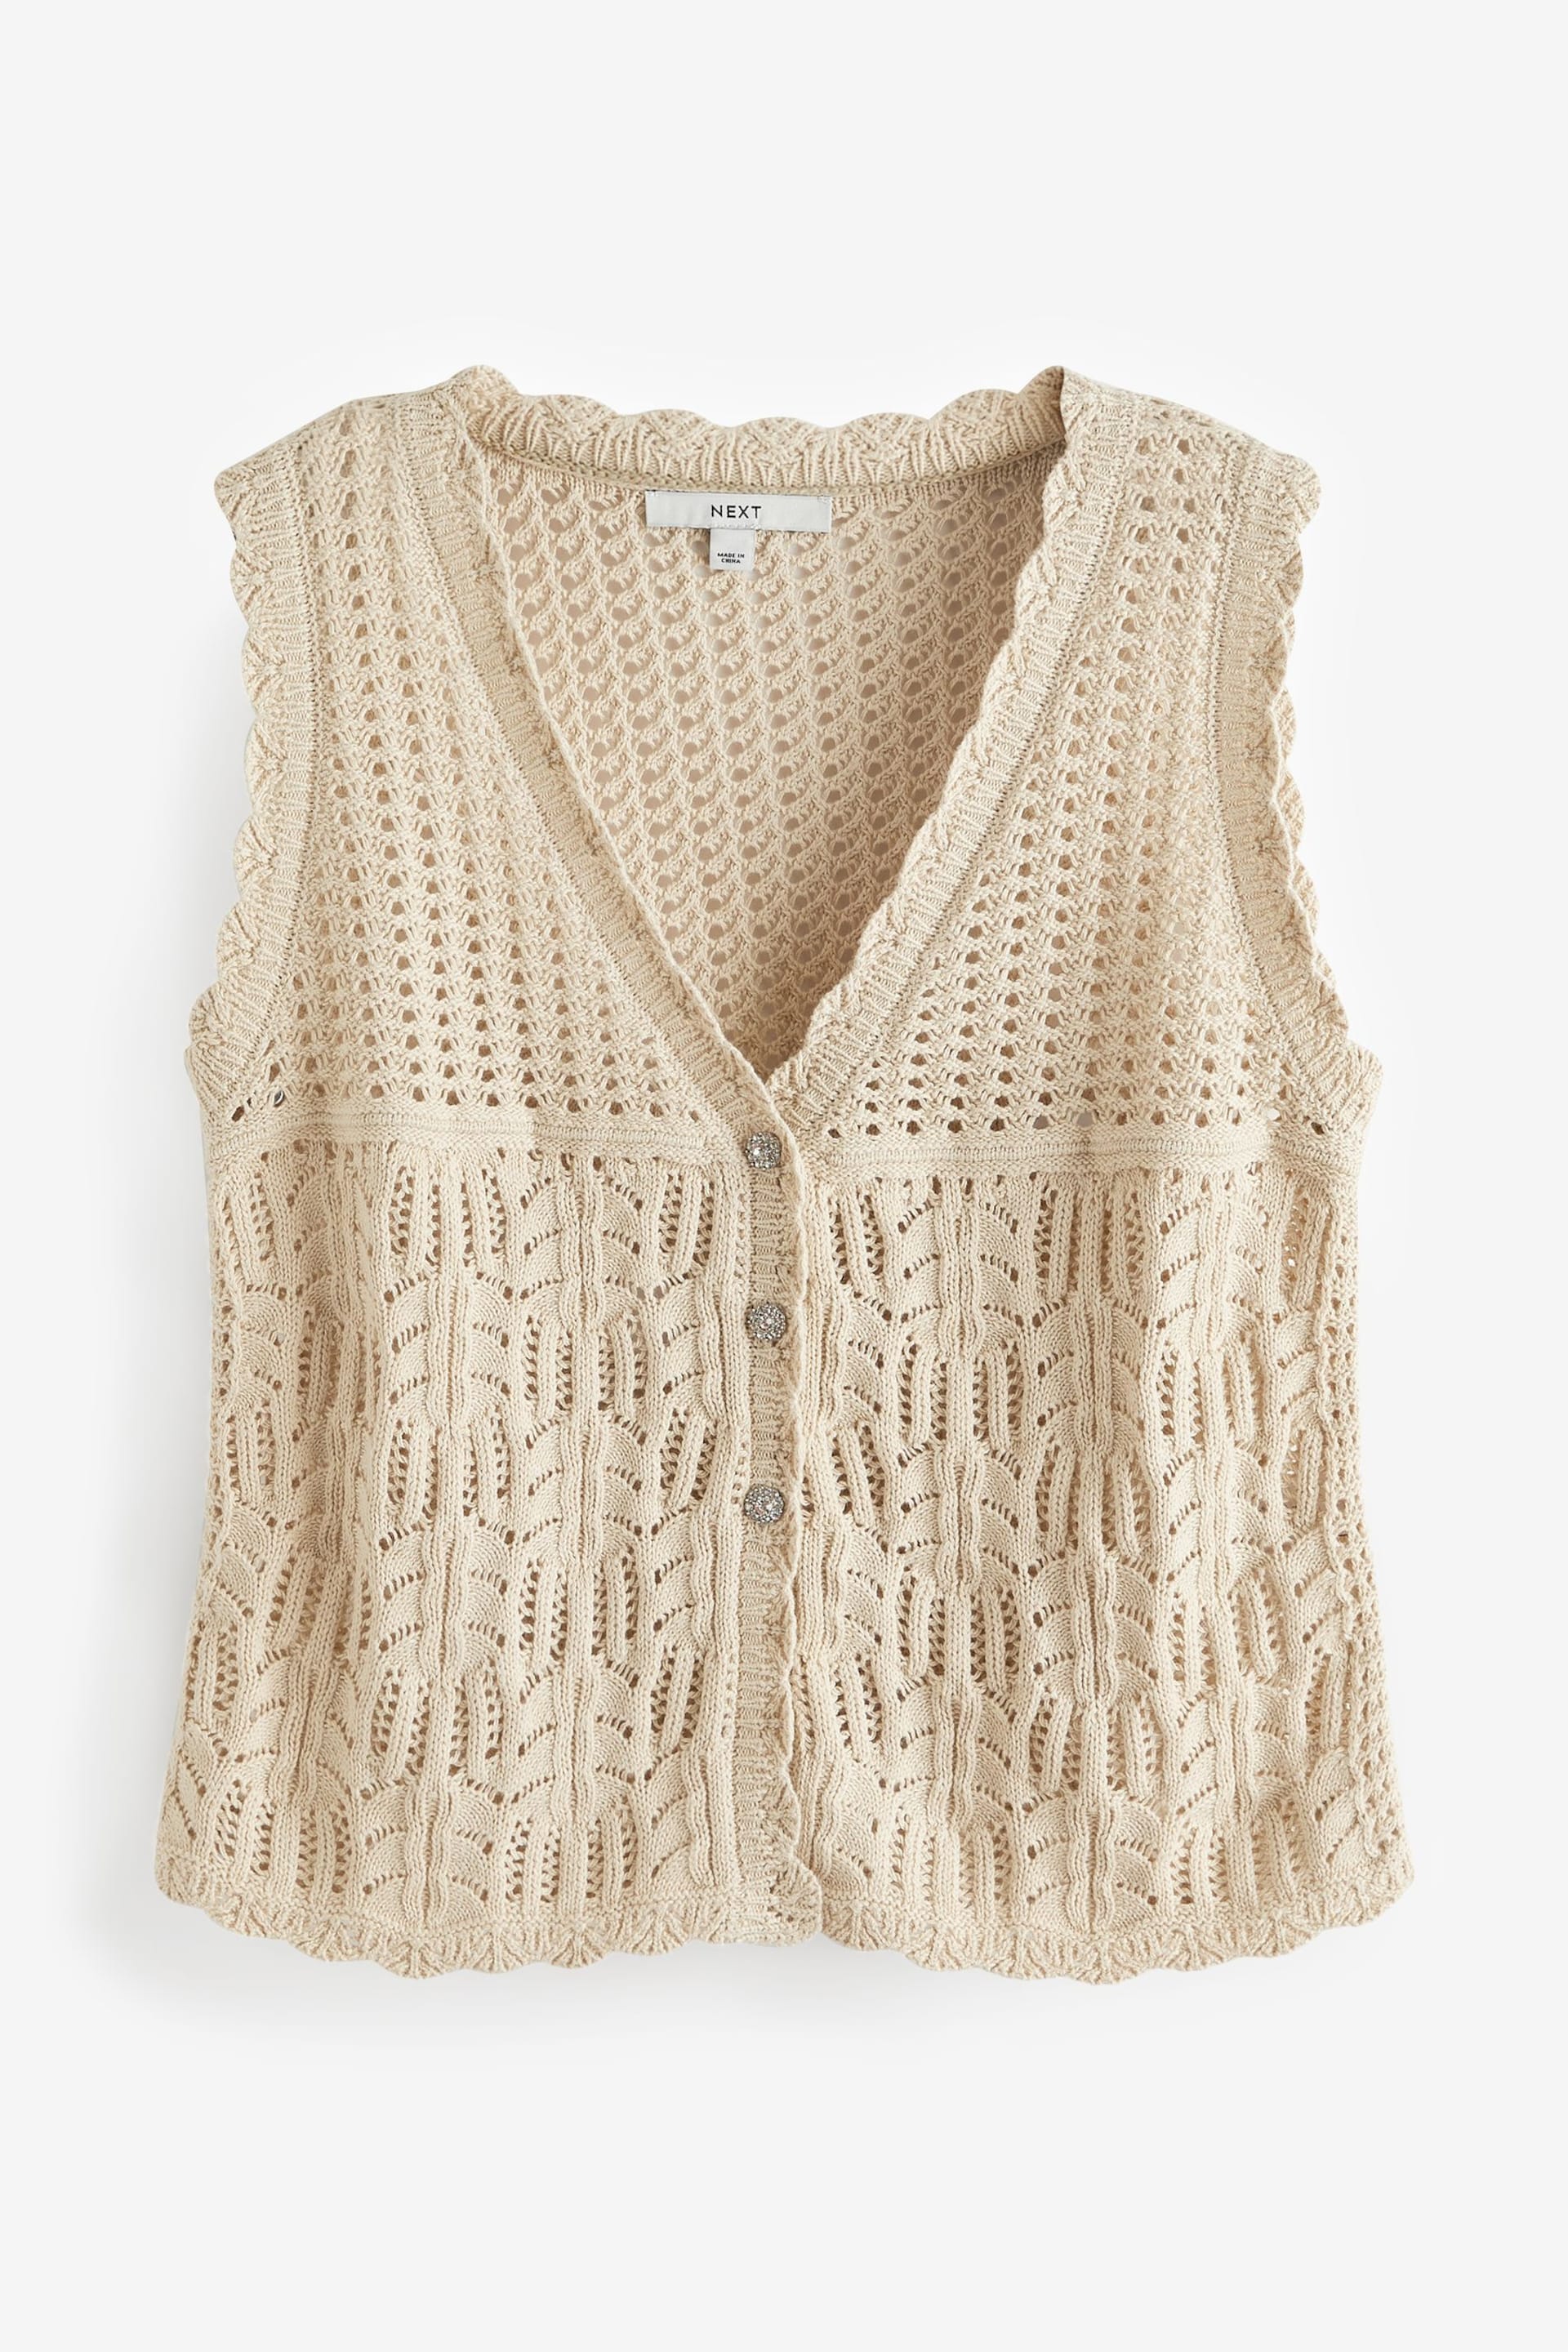 Ecru Cream Crochet Gem Button Vest - Image 5 of 6